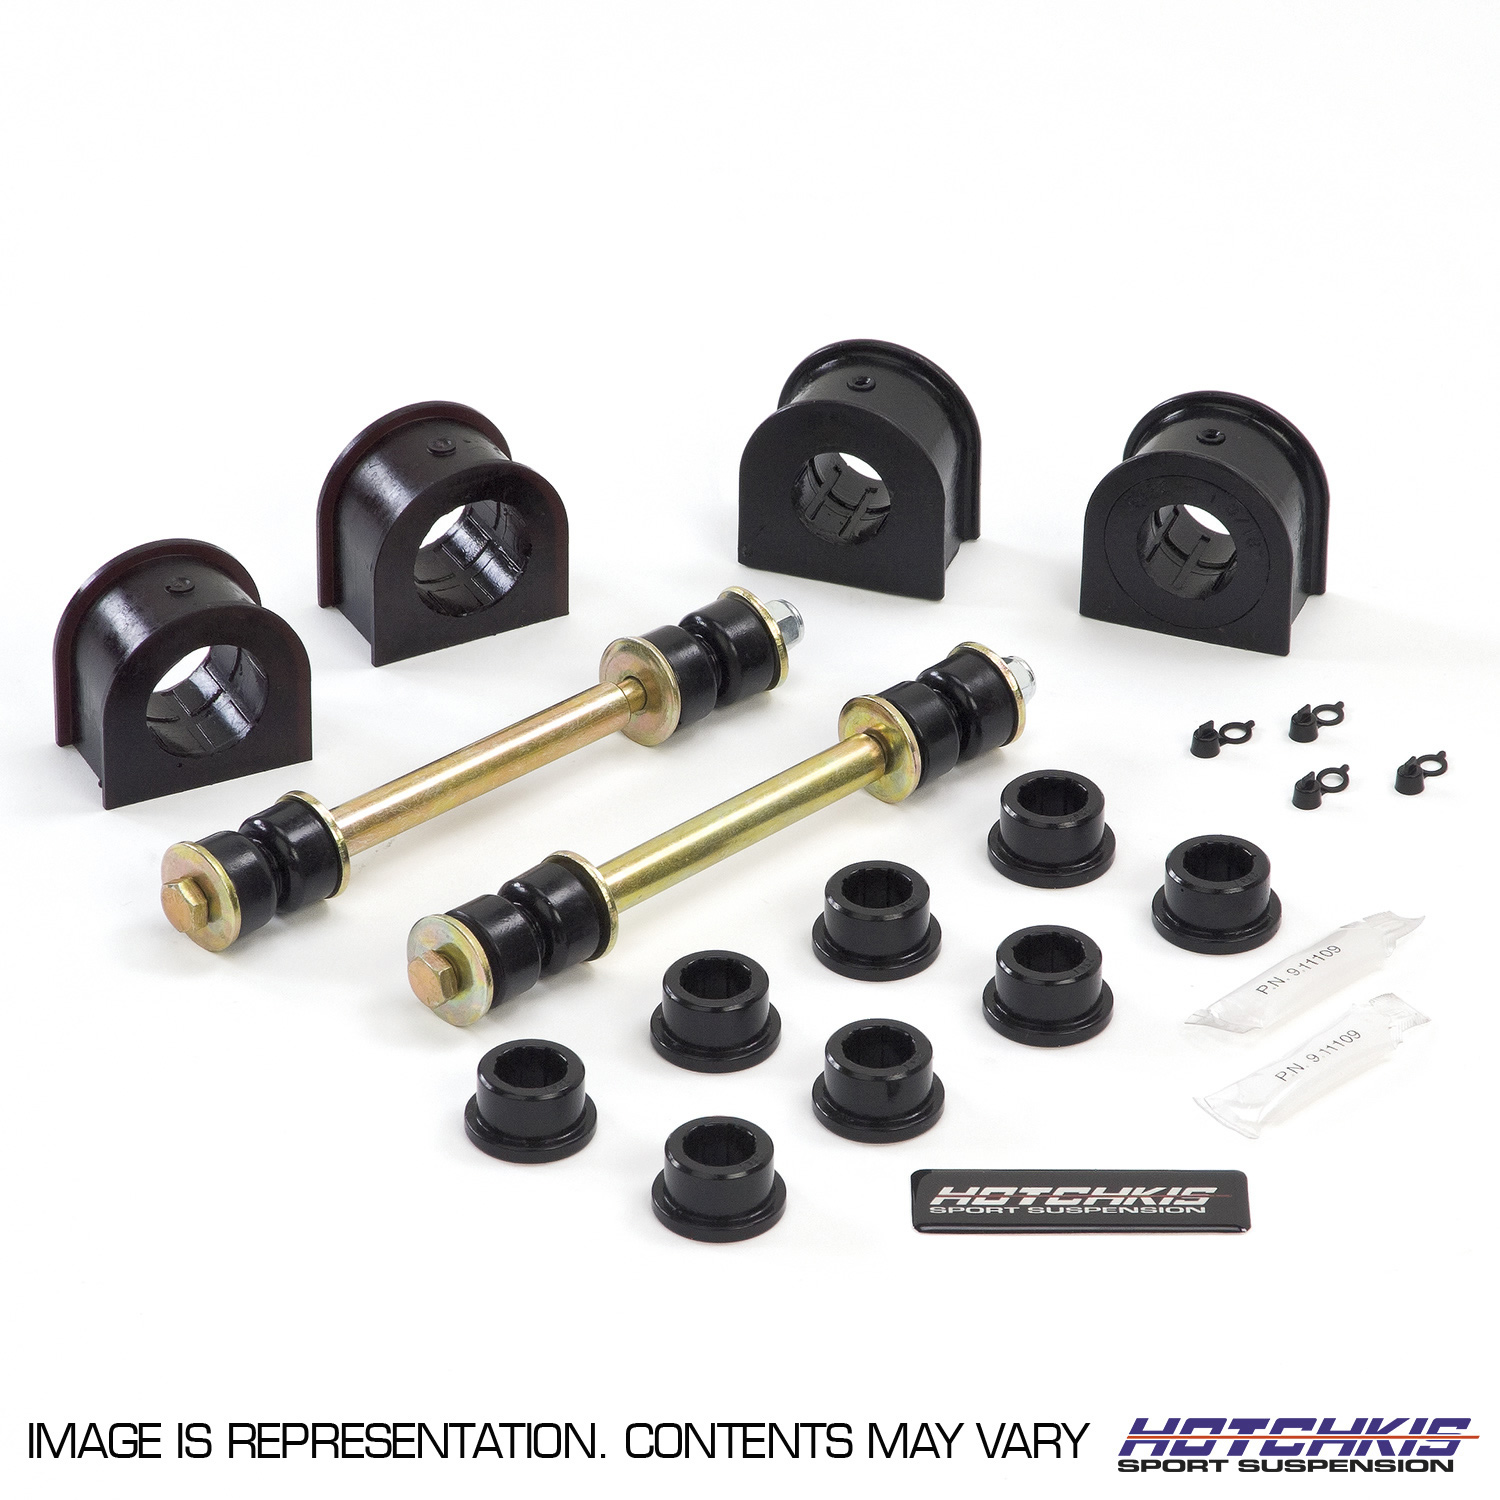 Rebuild Service Kit For Hotchkis Sport Suspension Product Kit 2260R